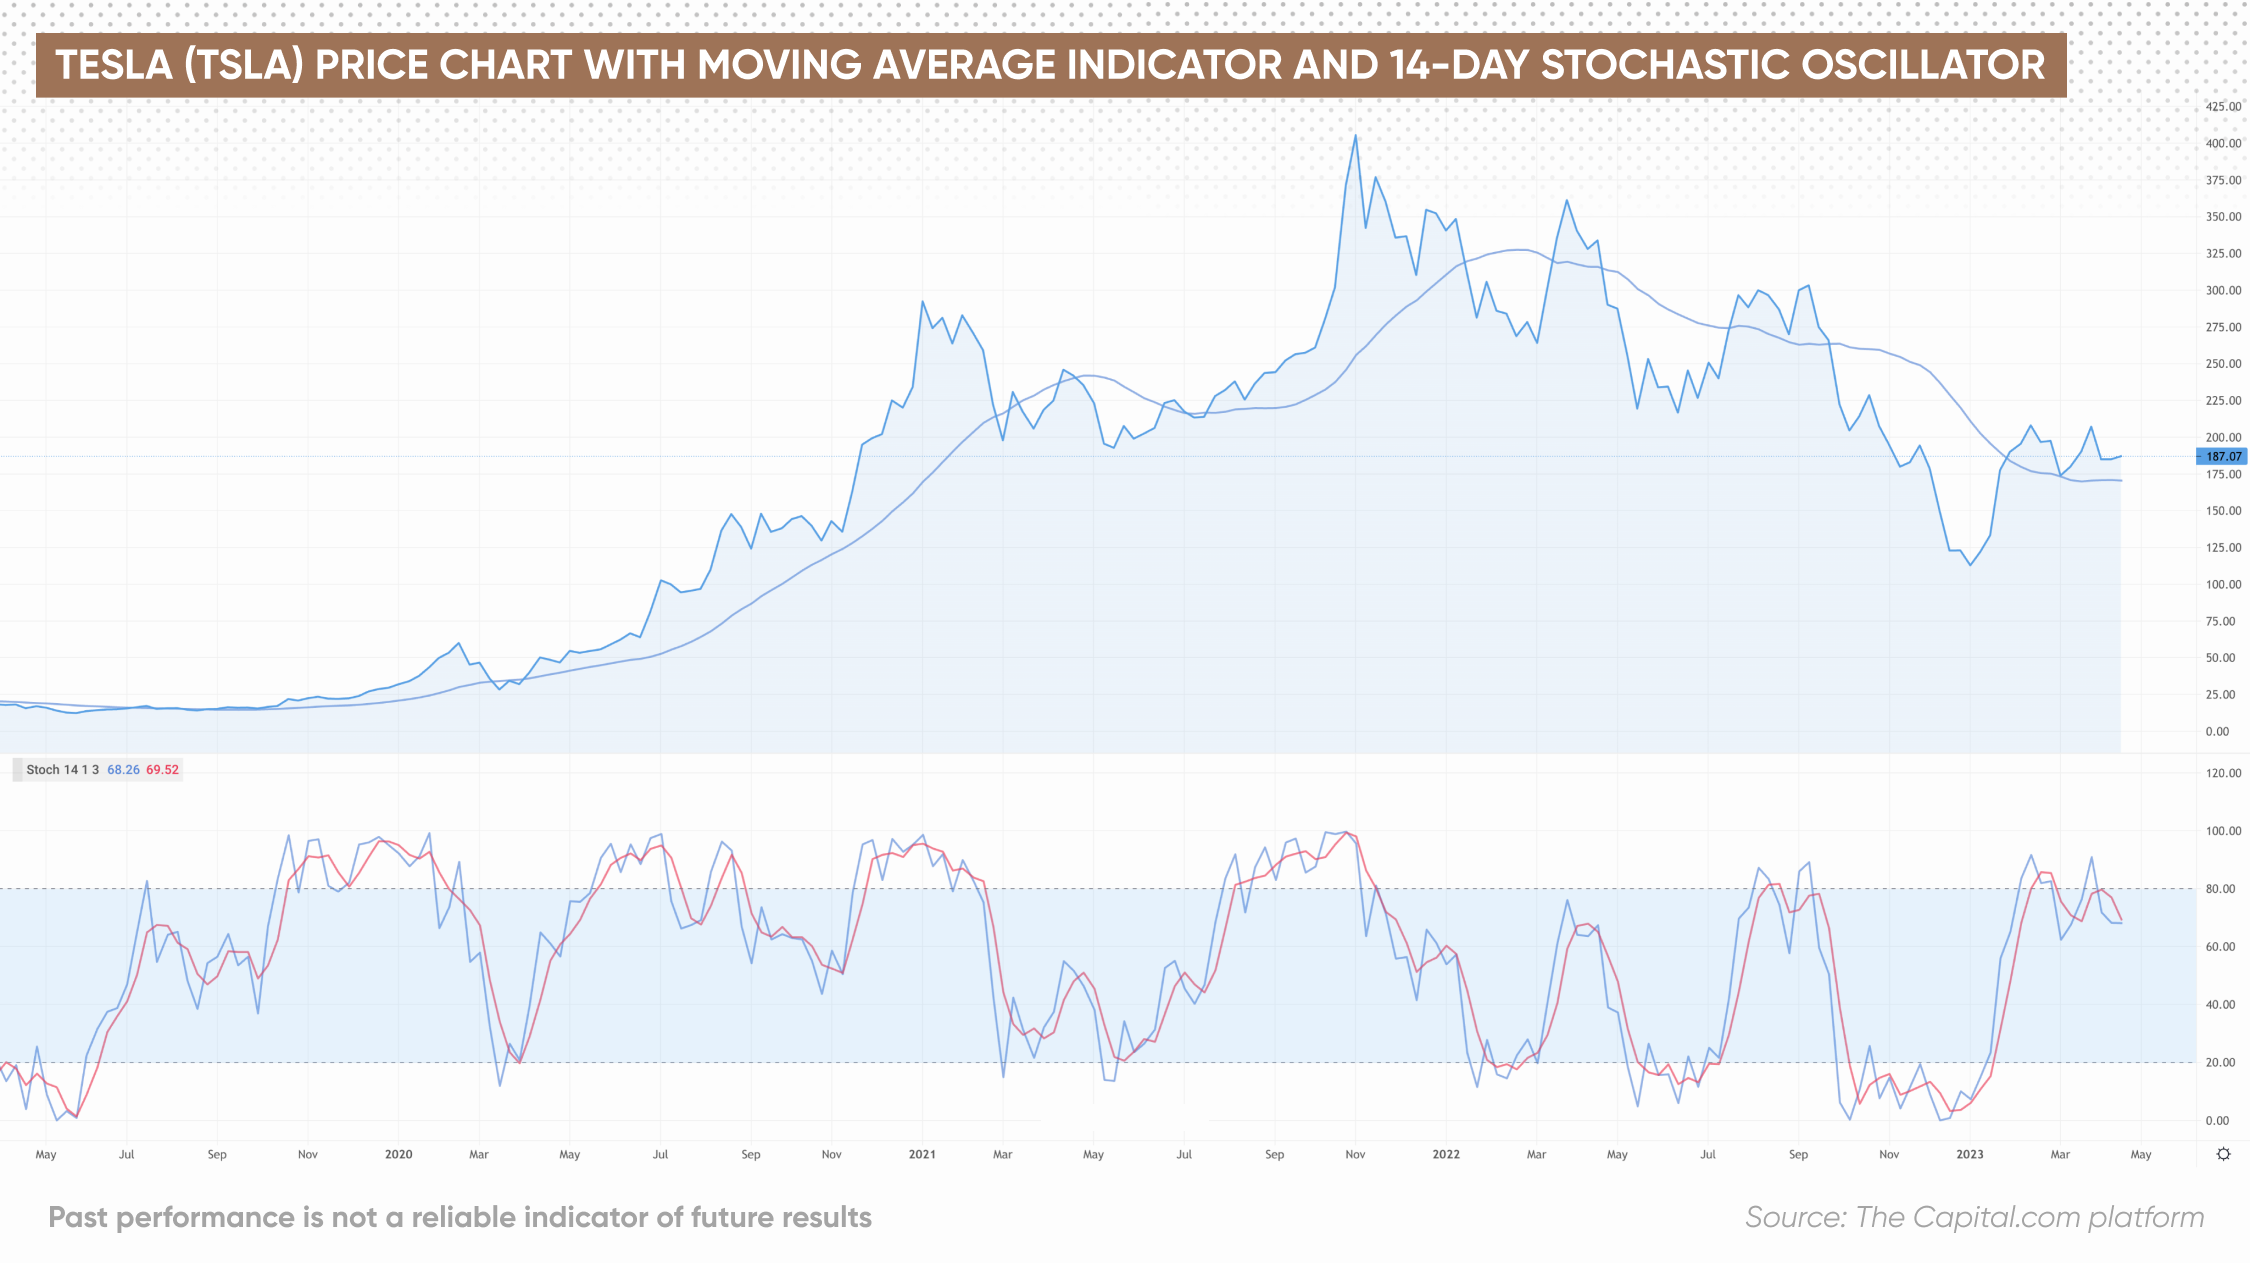 Tesla (TSLA) price chart with moving average indicator and 14-day stochastic oscillator